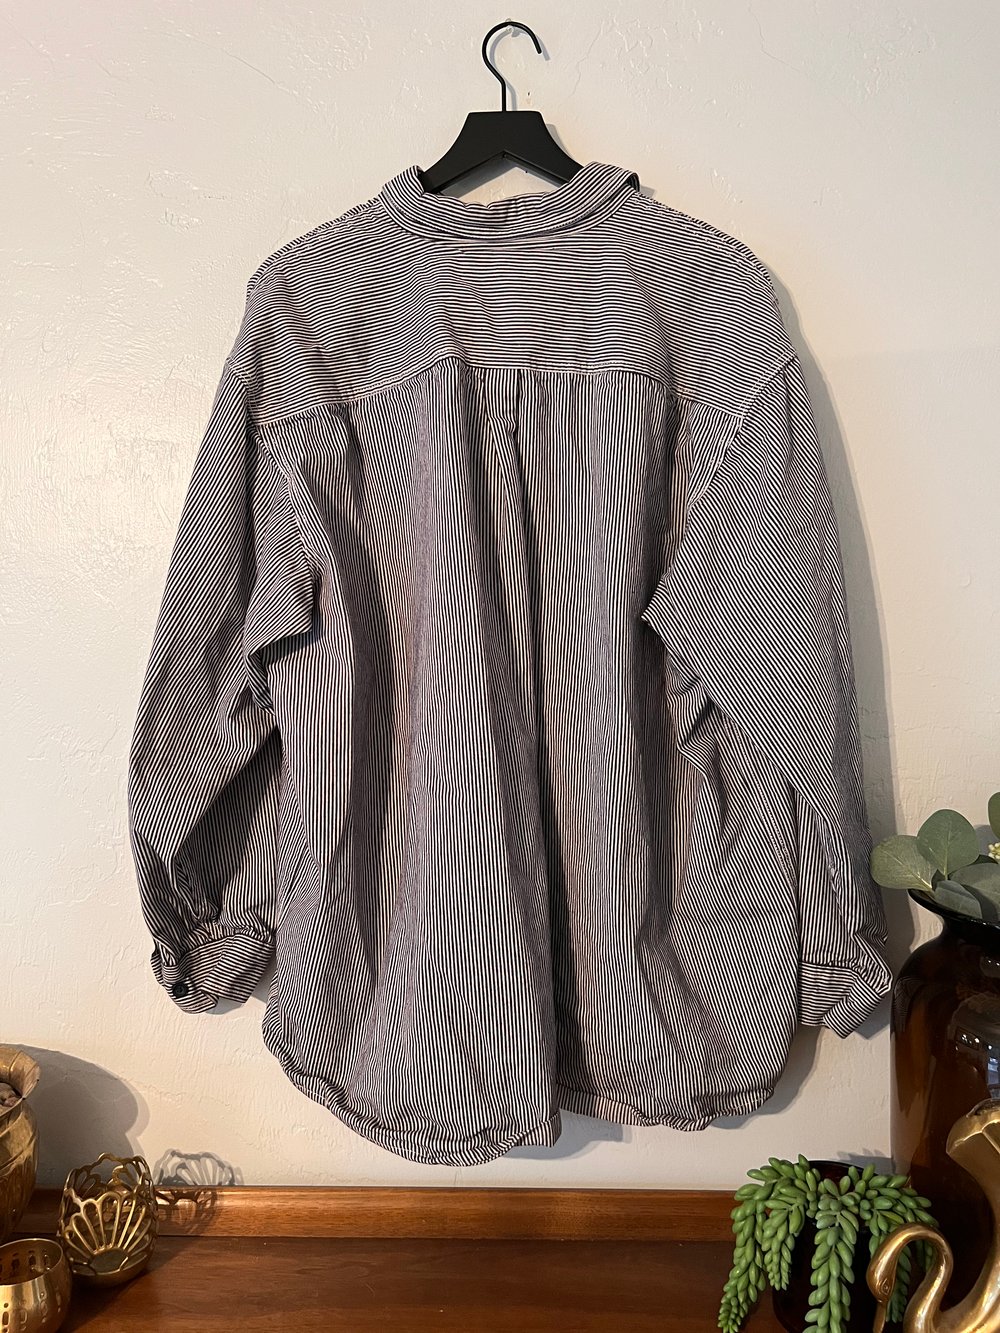 Key Hickory Stripe Long Sleeve Work Shirt (XXL)